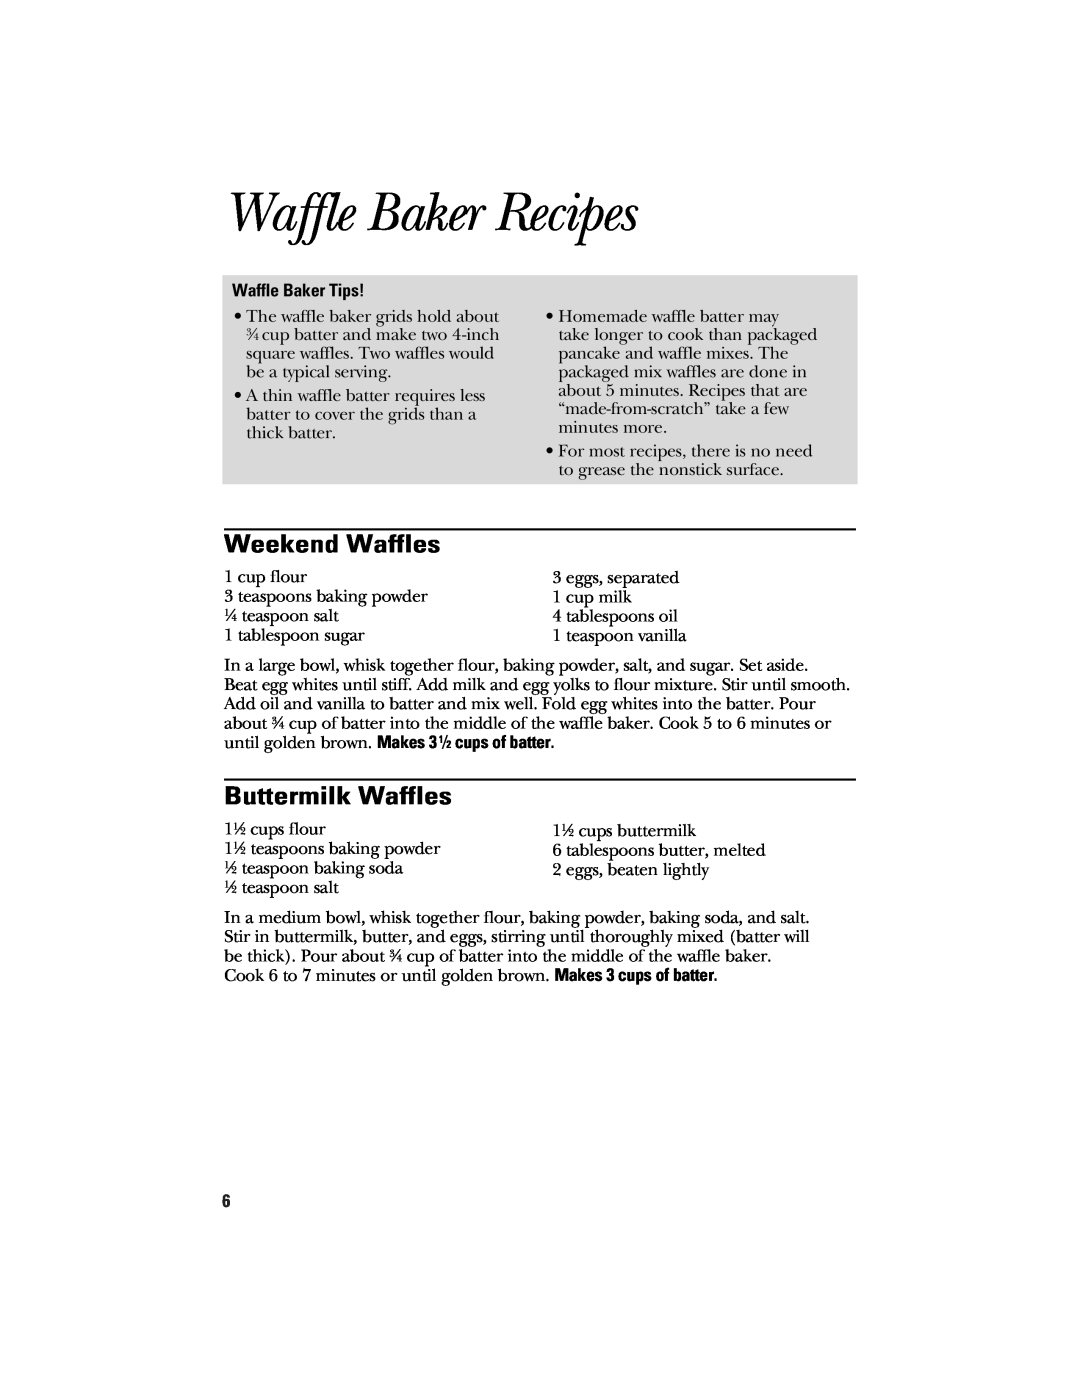 GE 840085700, 106582 manual Waffle Baker Recipes, Weekend Waffles, Buttermilk Waffles 